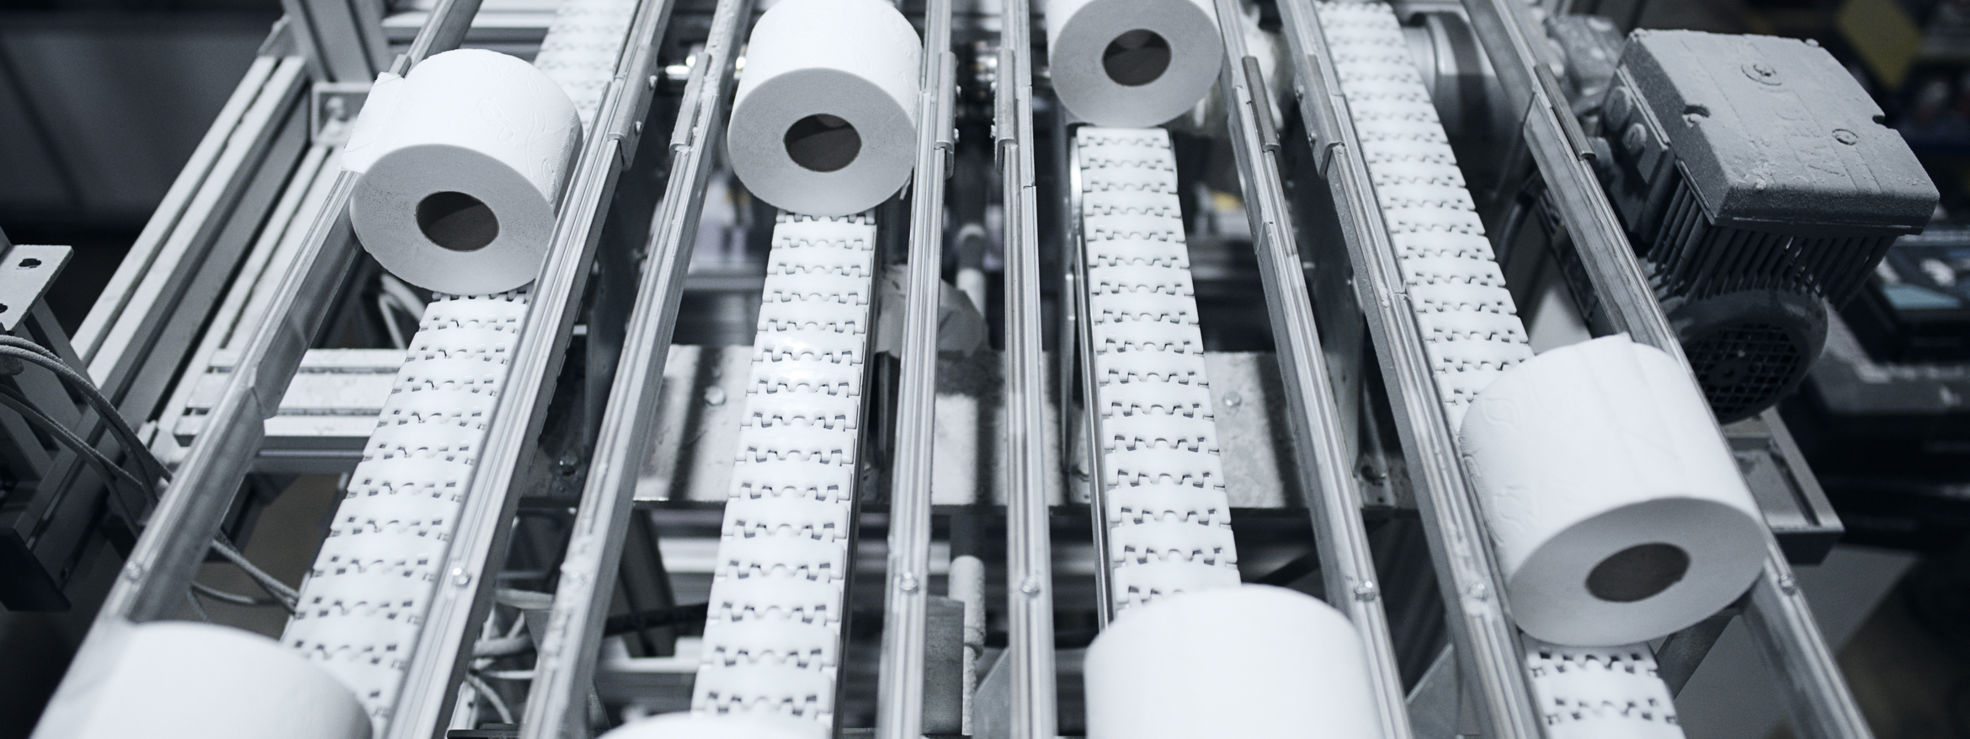 tissue paper rolls on conveyor belt